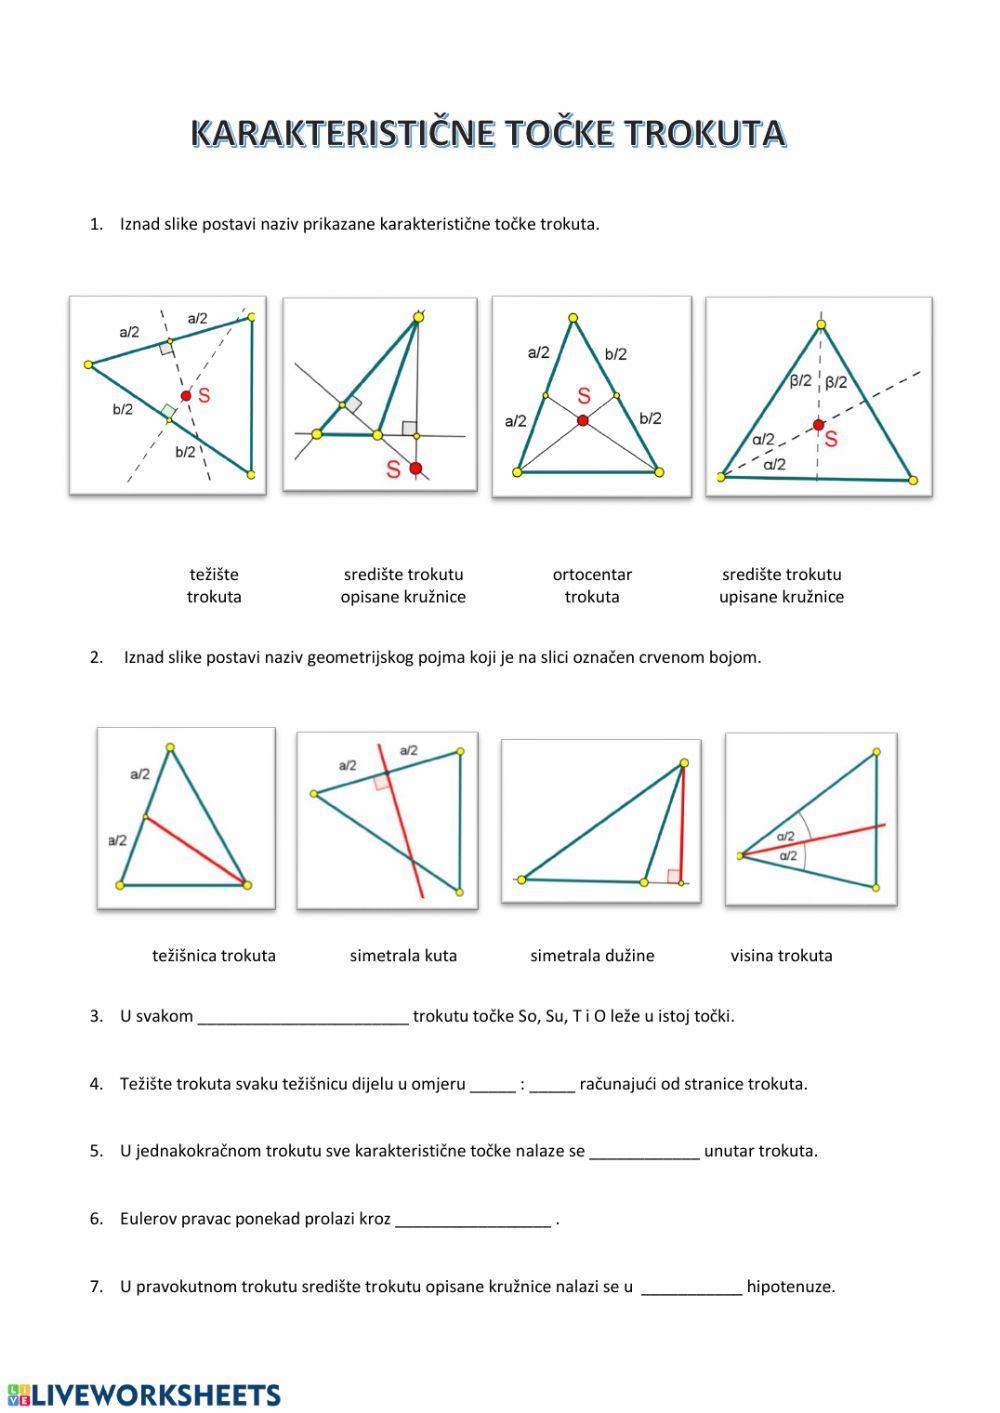 Karakteristične točke trokuta i Eulerov pravac